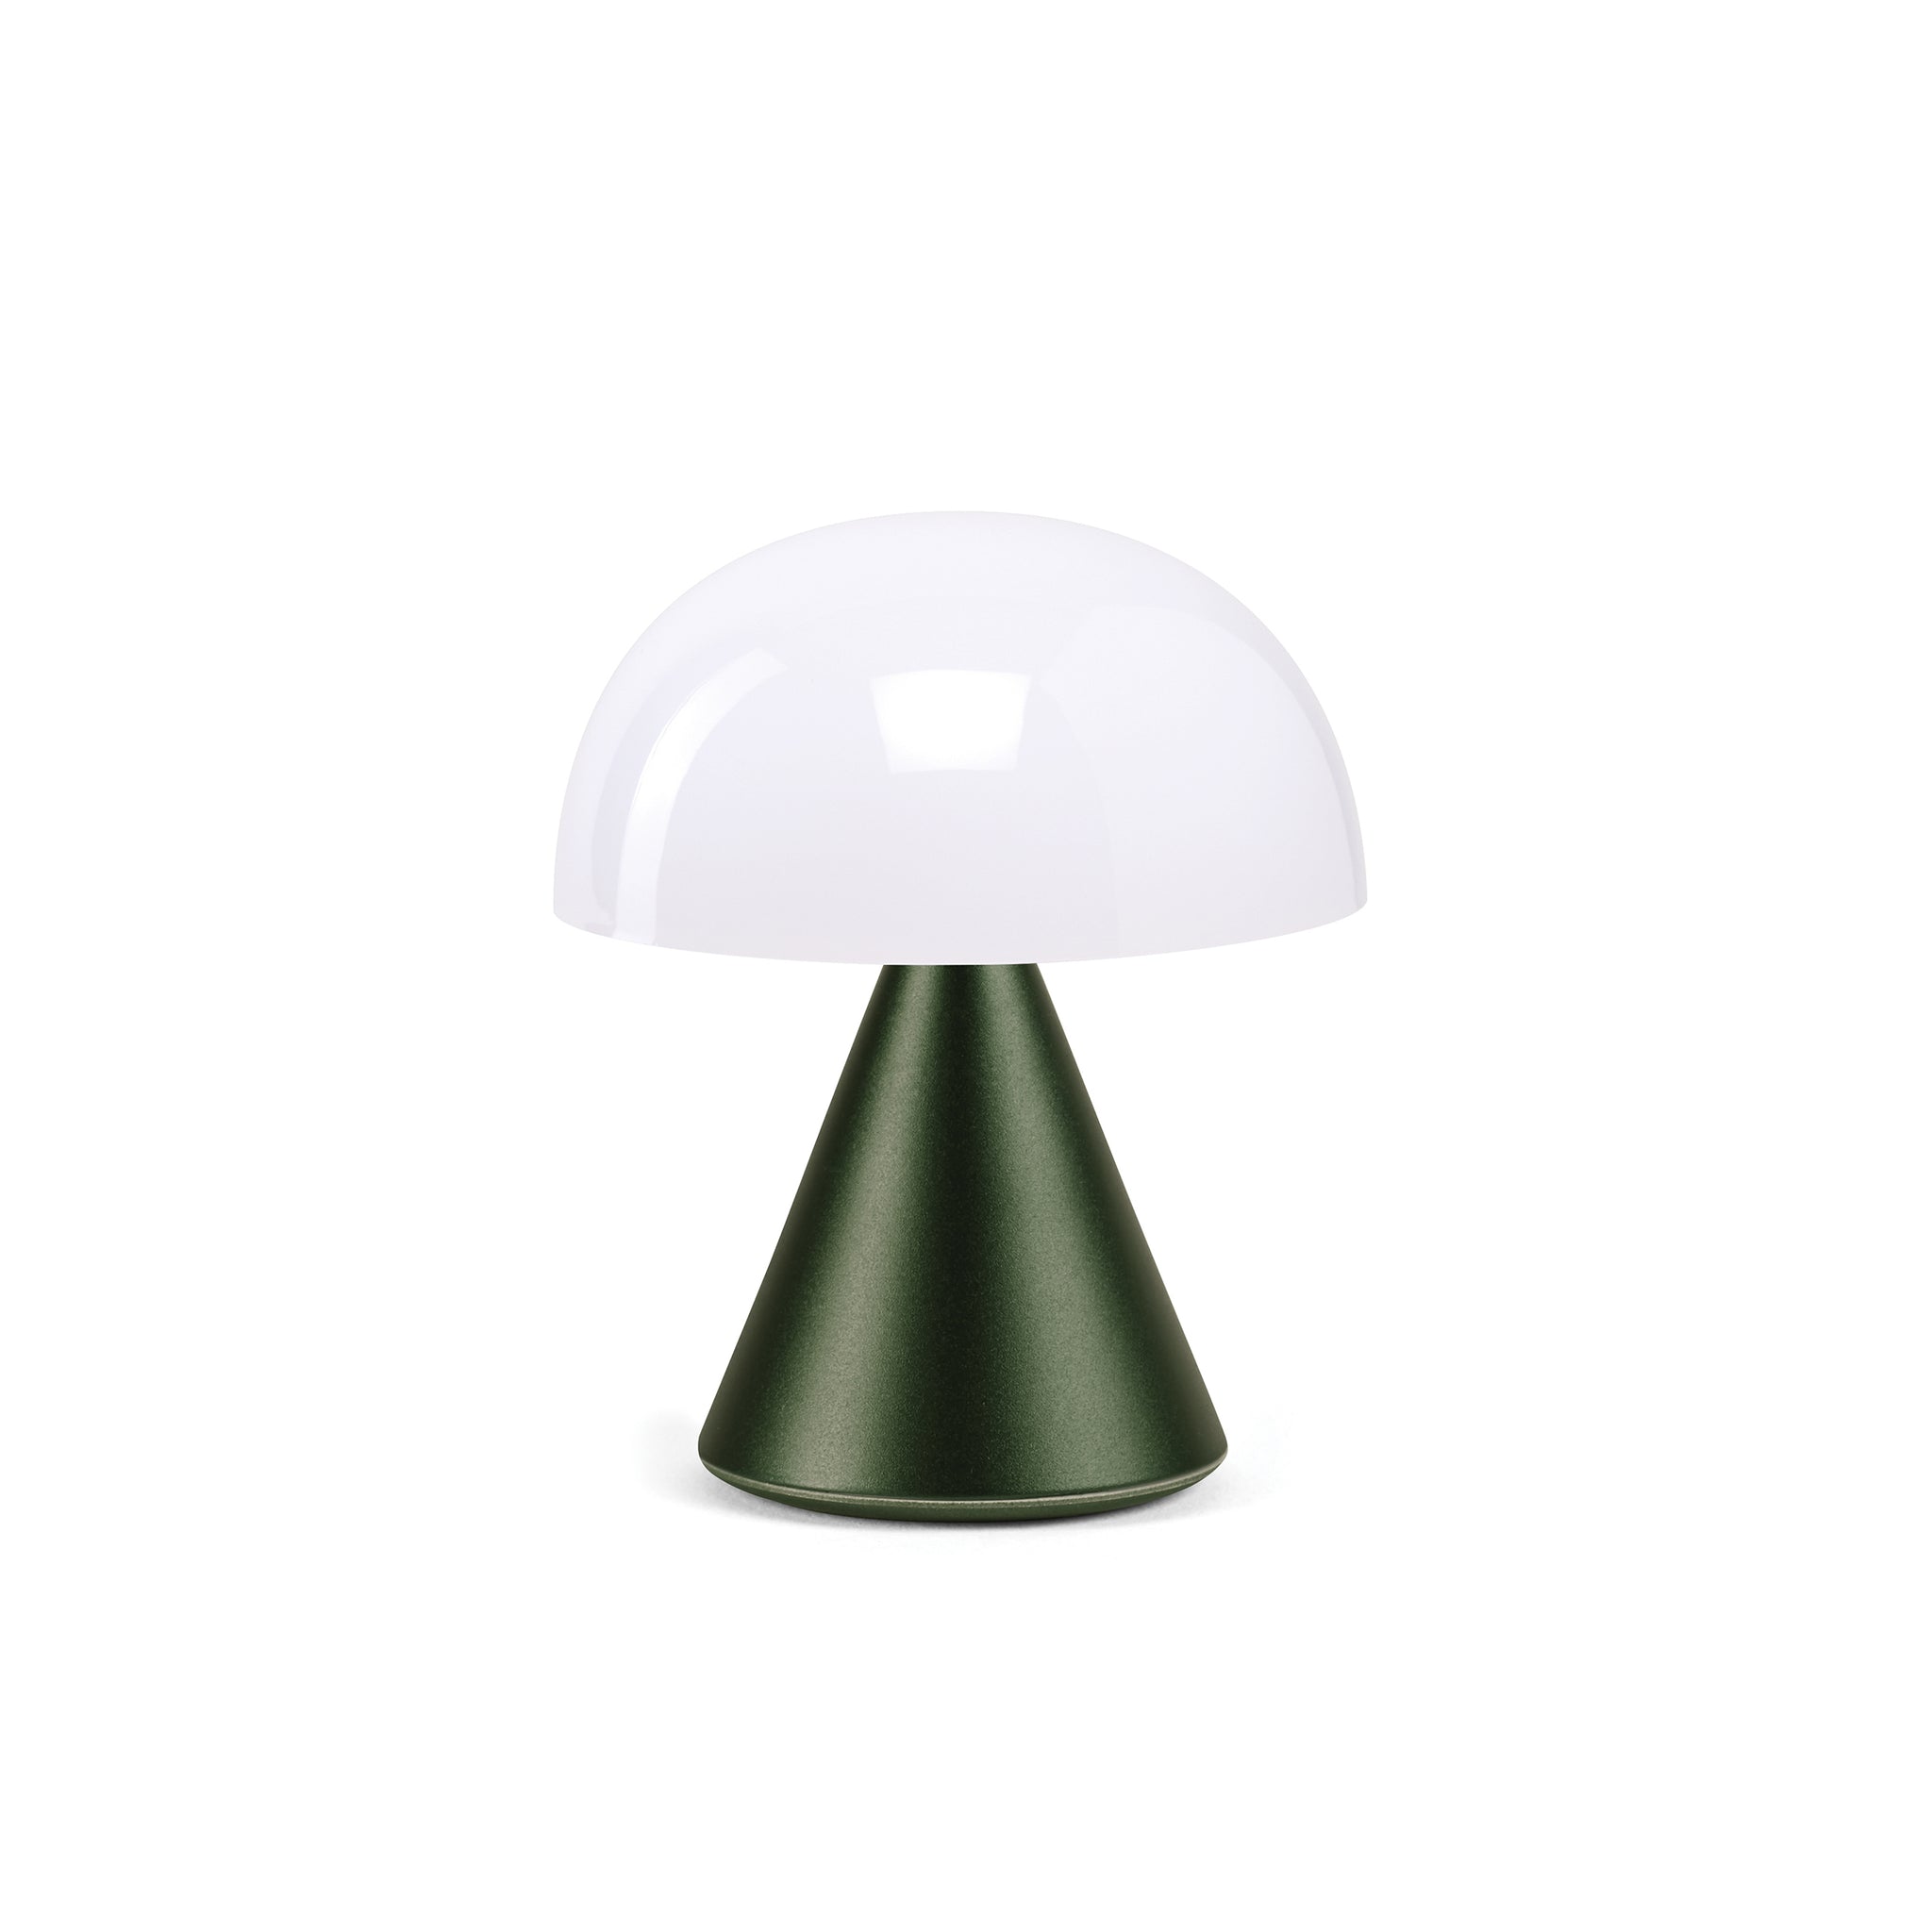 Lexon Mina Small Oplaadbare LED-Lamp Donkergroen│voorkant witte achtergrond met licht uit